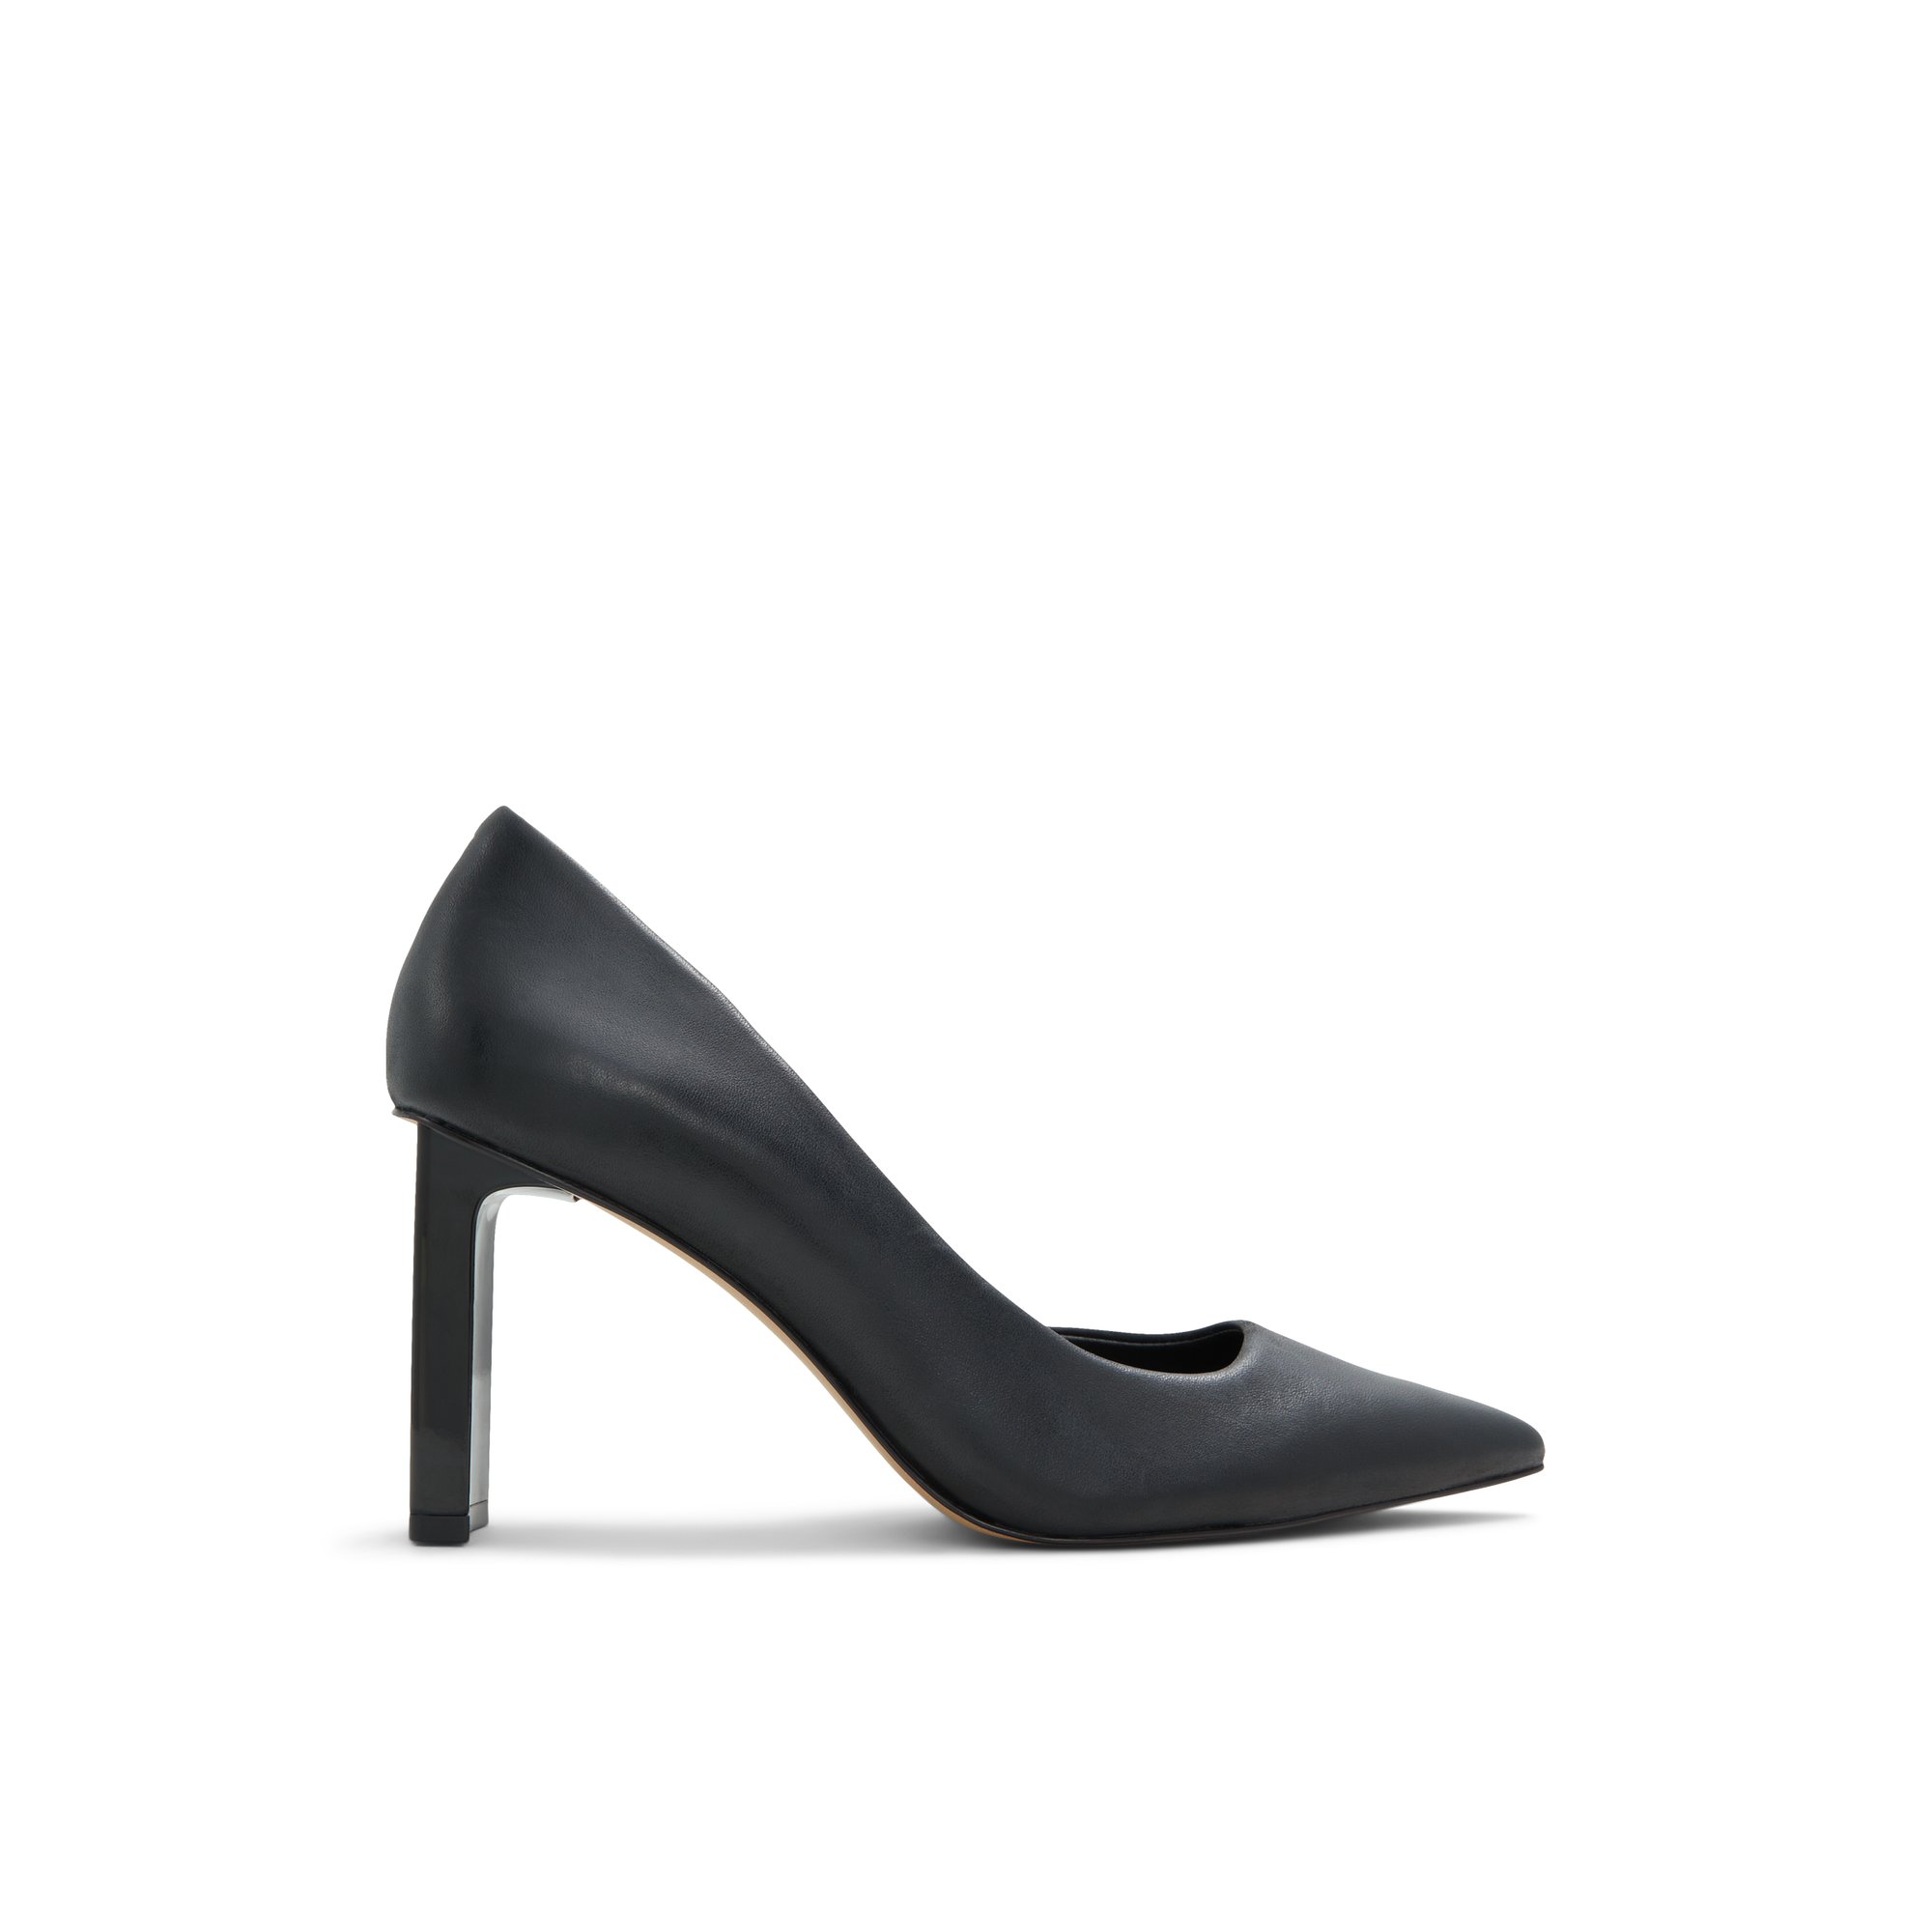 ALDO Ligowan - Women's Pump Heel - Black